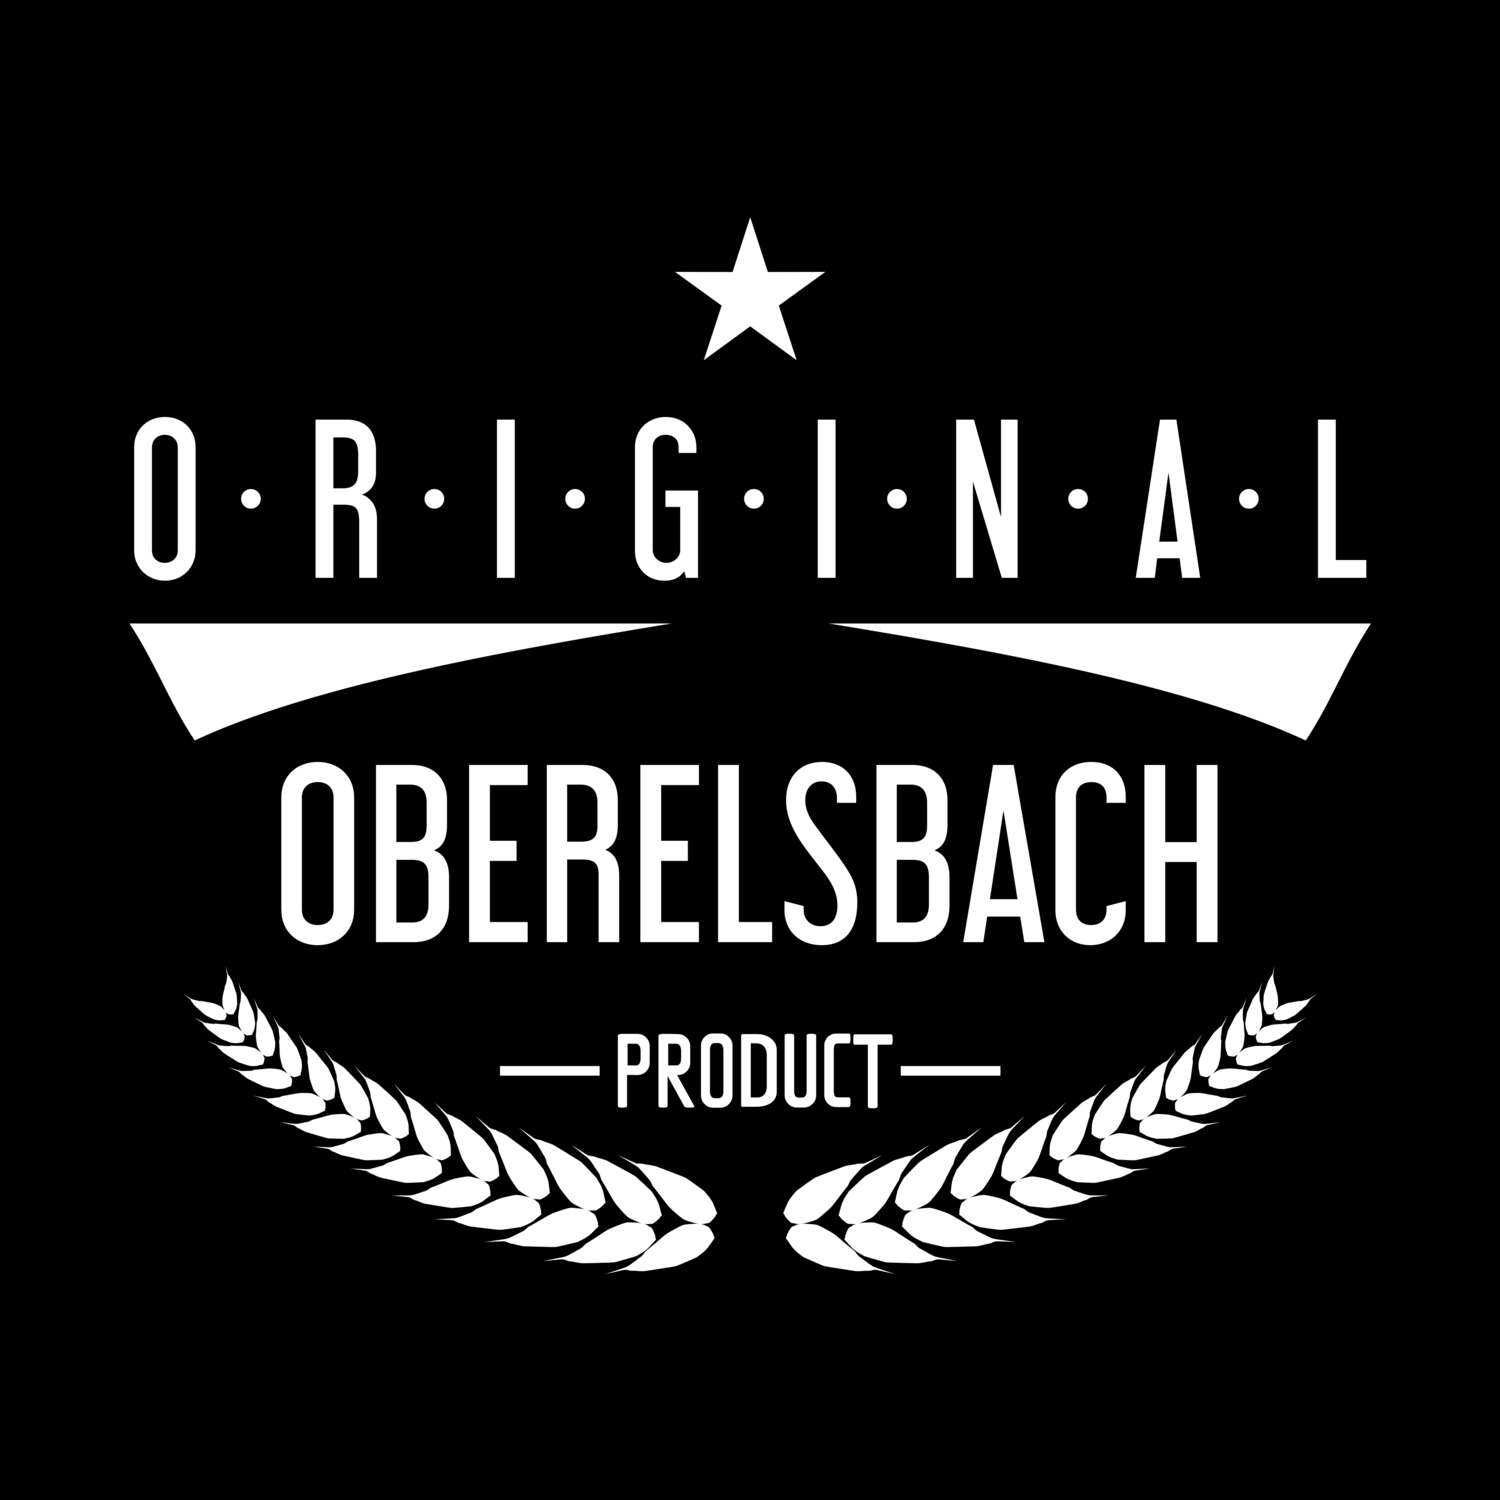 Oberelsbach T-Shirt »Original Product«